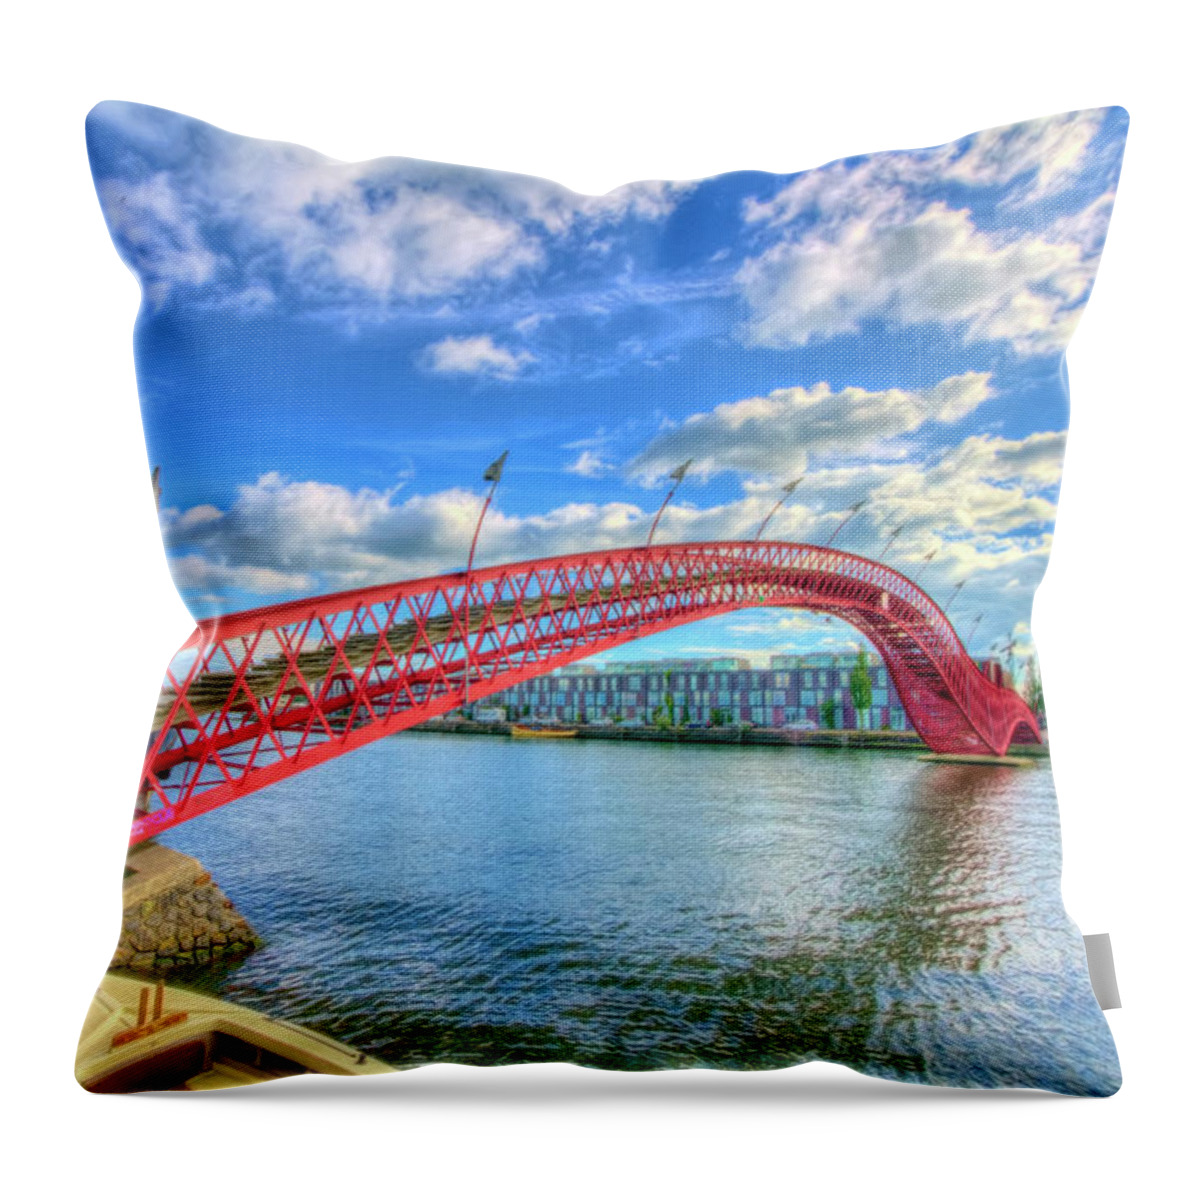 Python Bridge Throw Pillow featuring the photograph Python Bridge by Nadia Sanowar